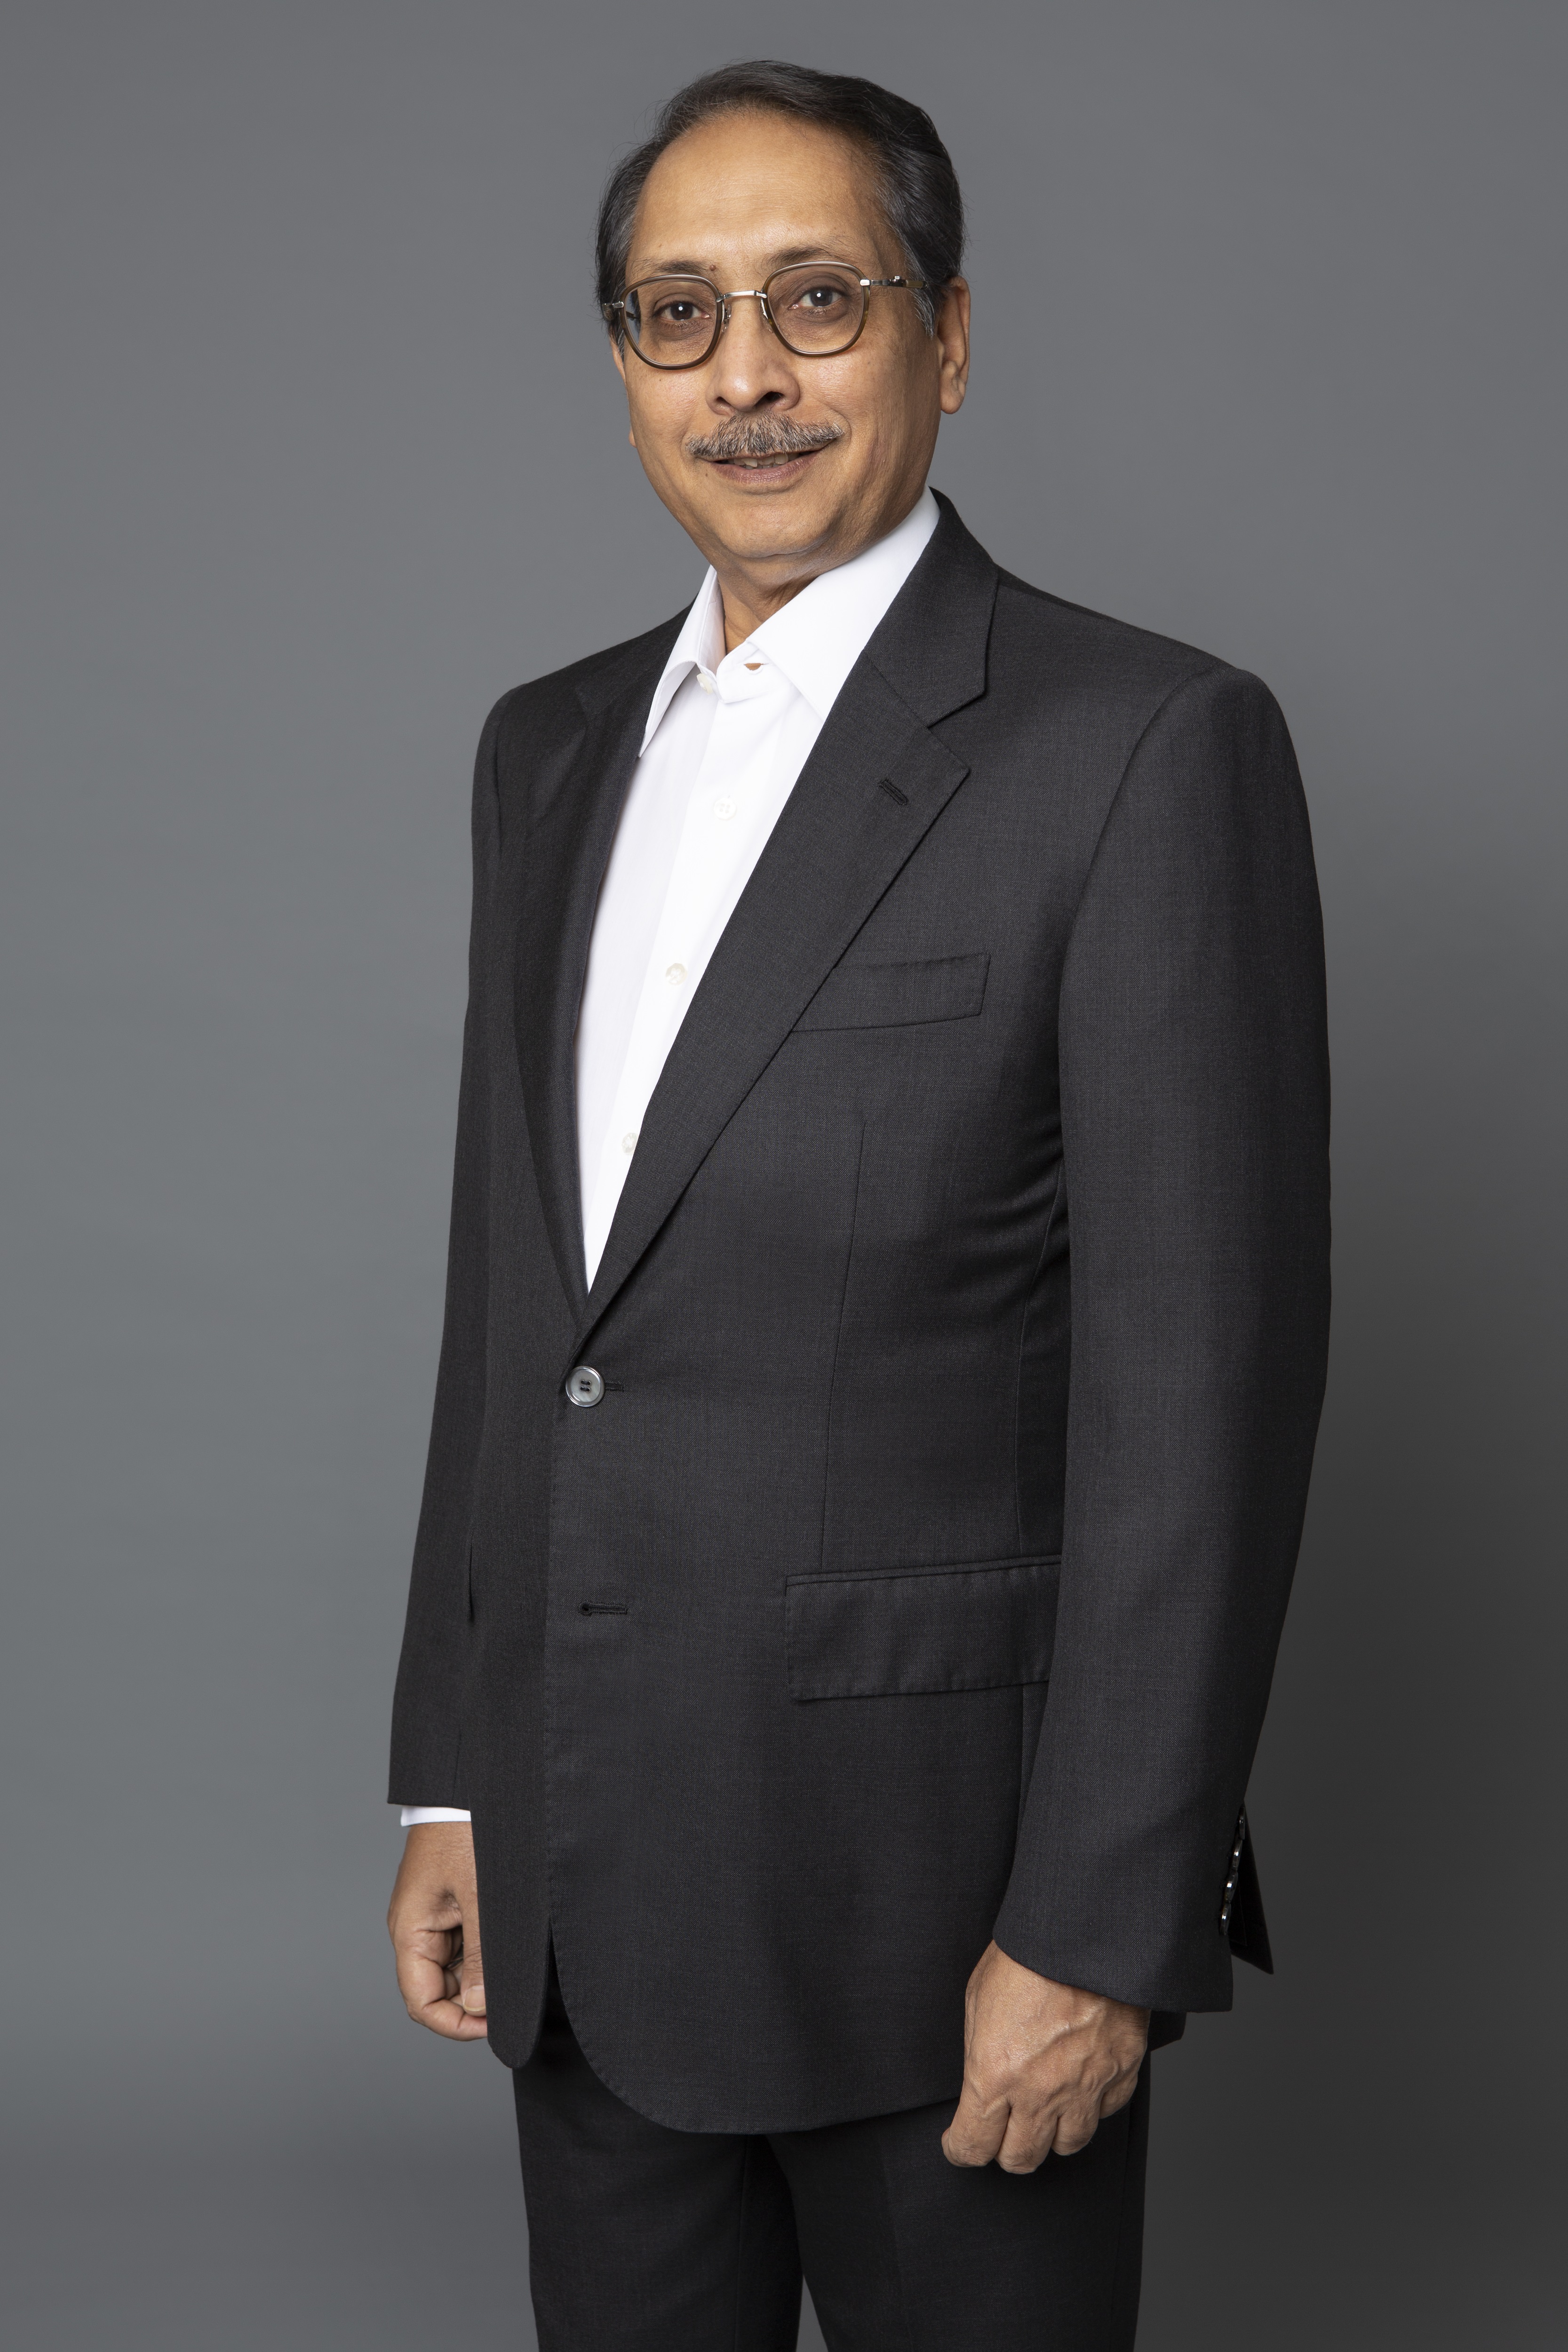 Mr. Aloke Lohia, Group CEO of Indorama Ventures. © IVL.